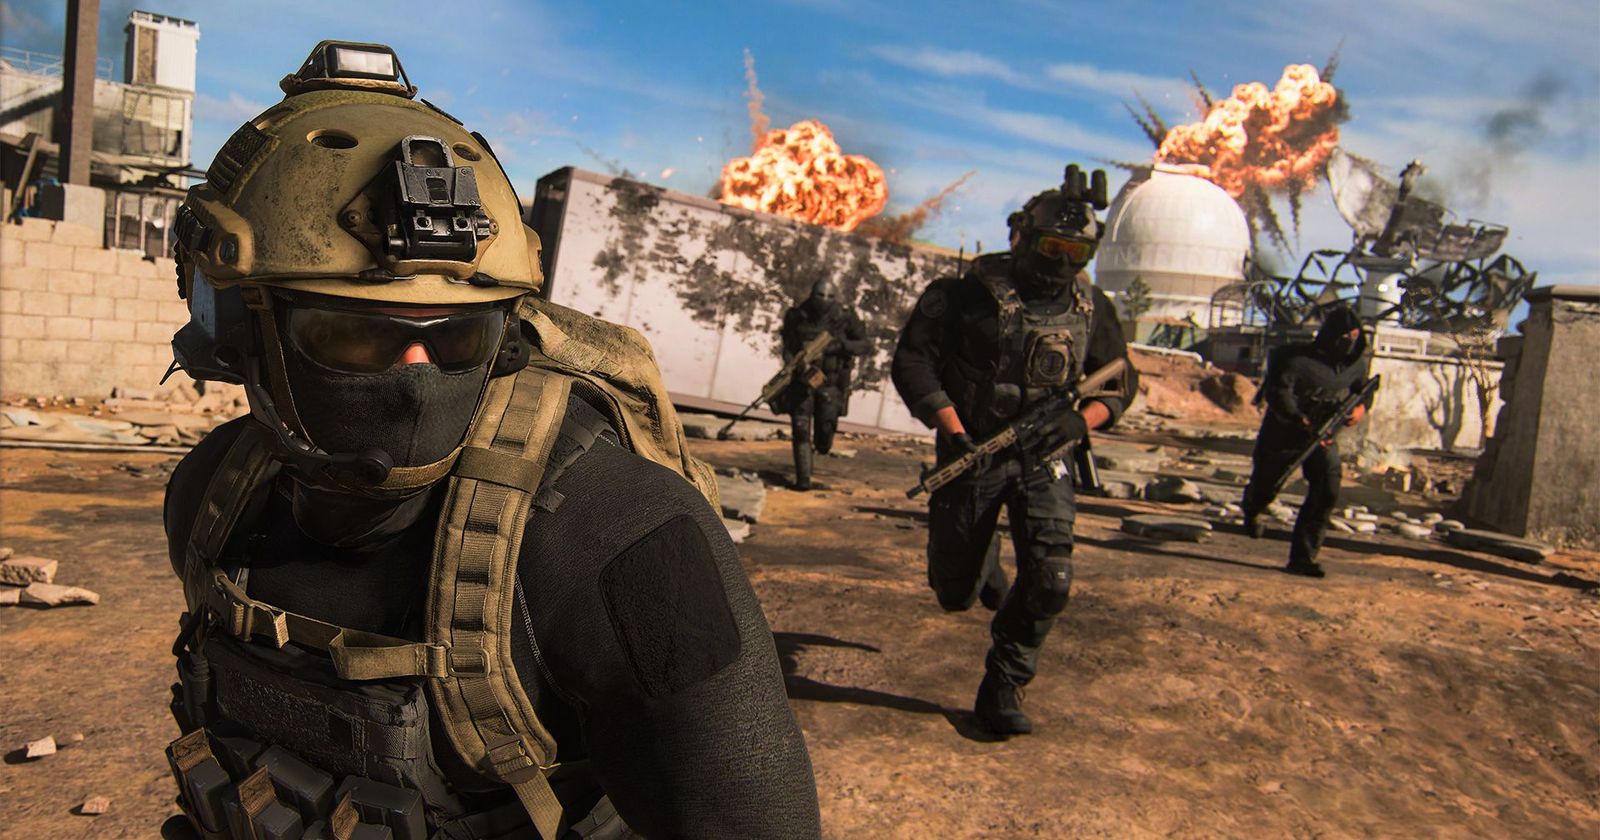 HOW TO Play Modern Warfare 3 Split Screen (MW3) 